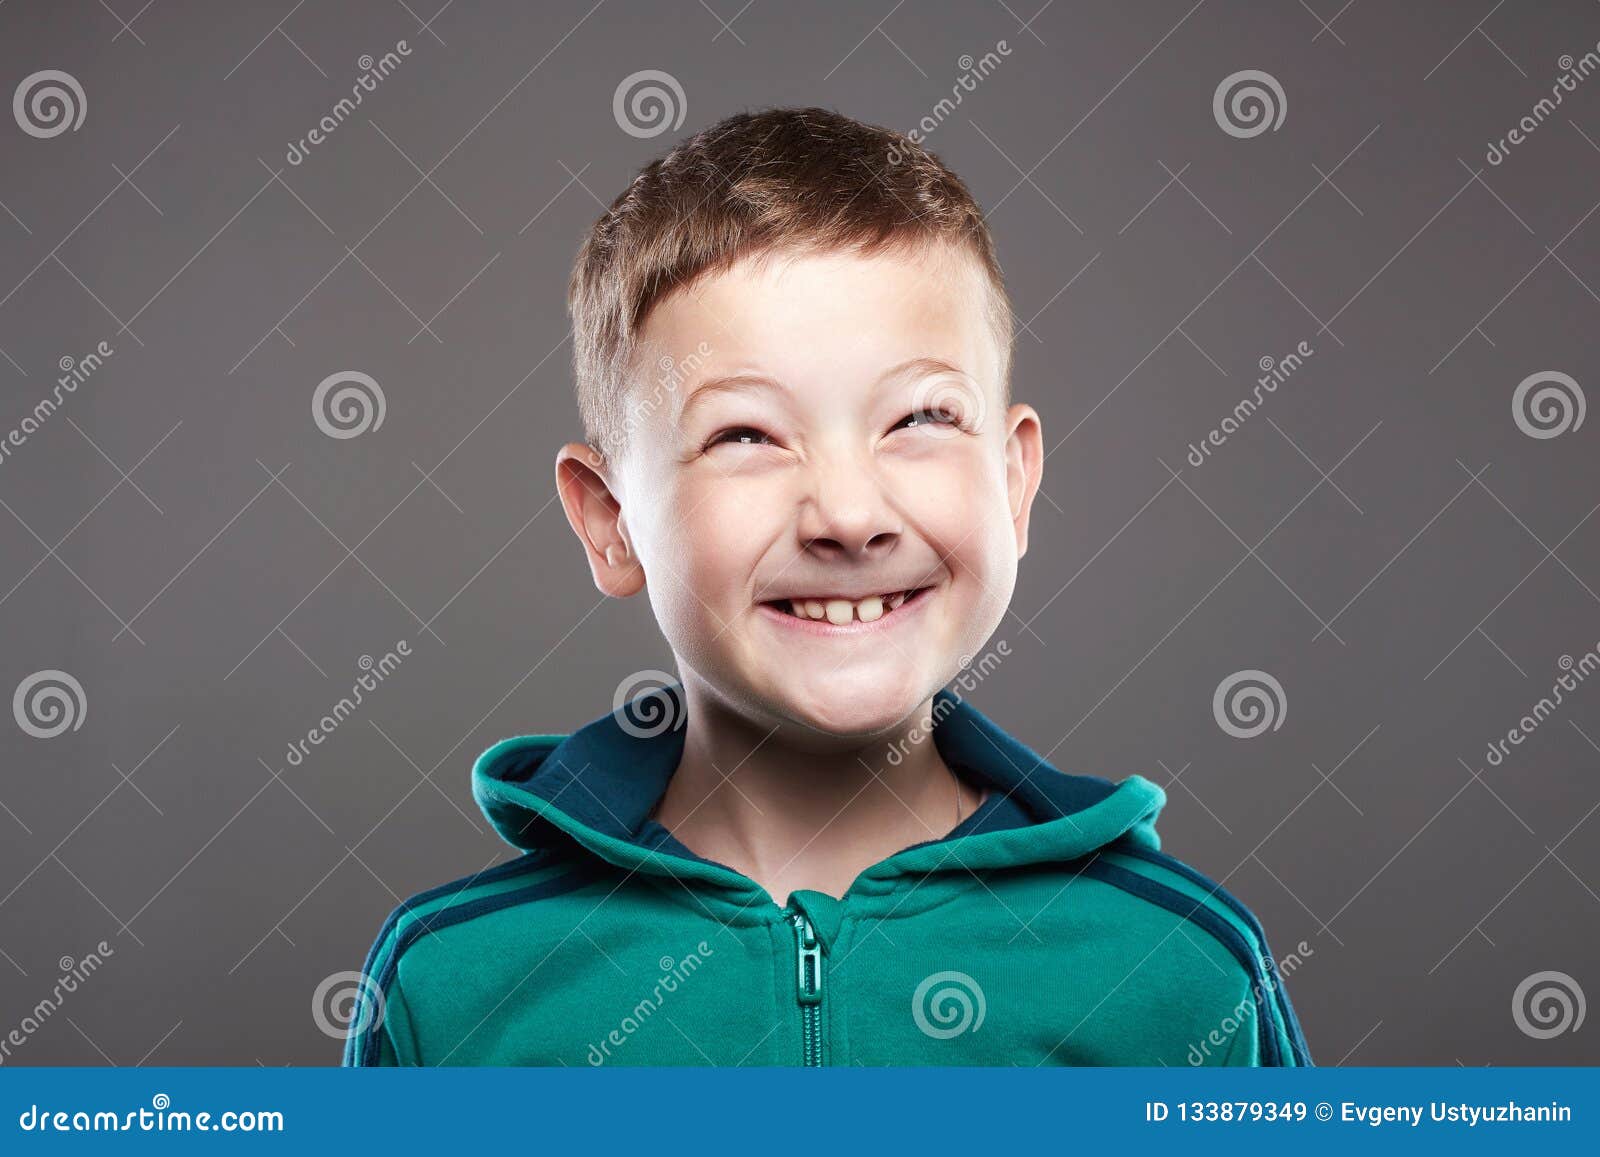 Funny kid. little boy stock image. Image of funny, fashionable ...